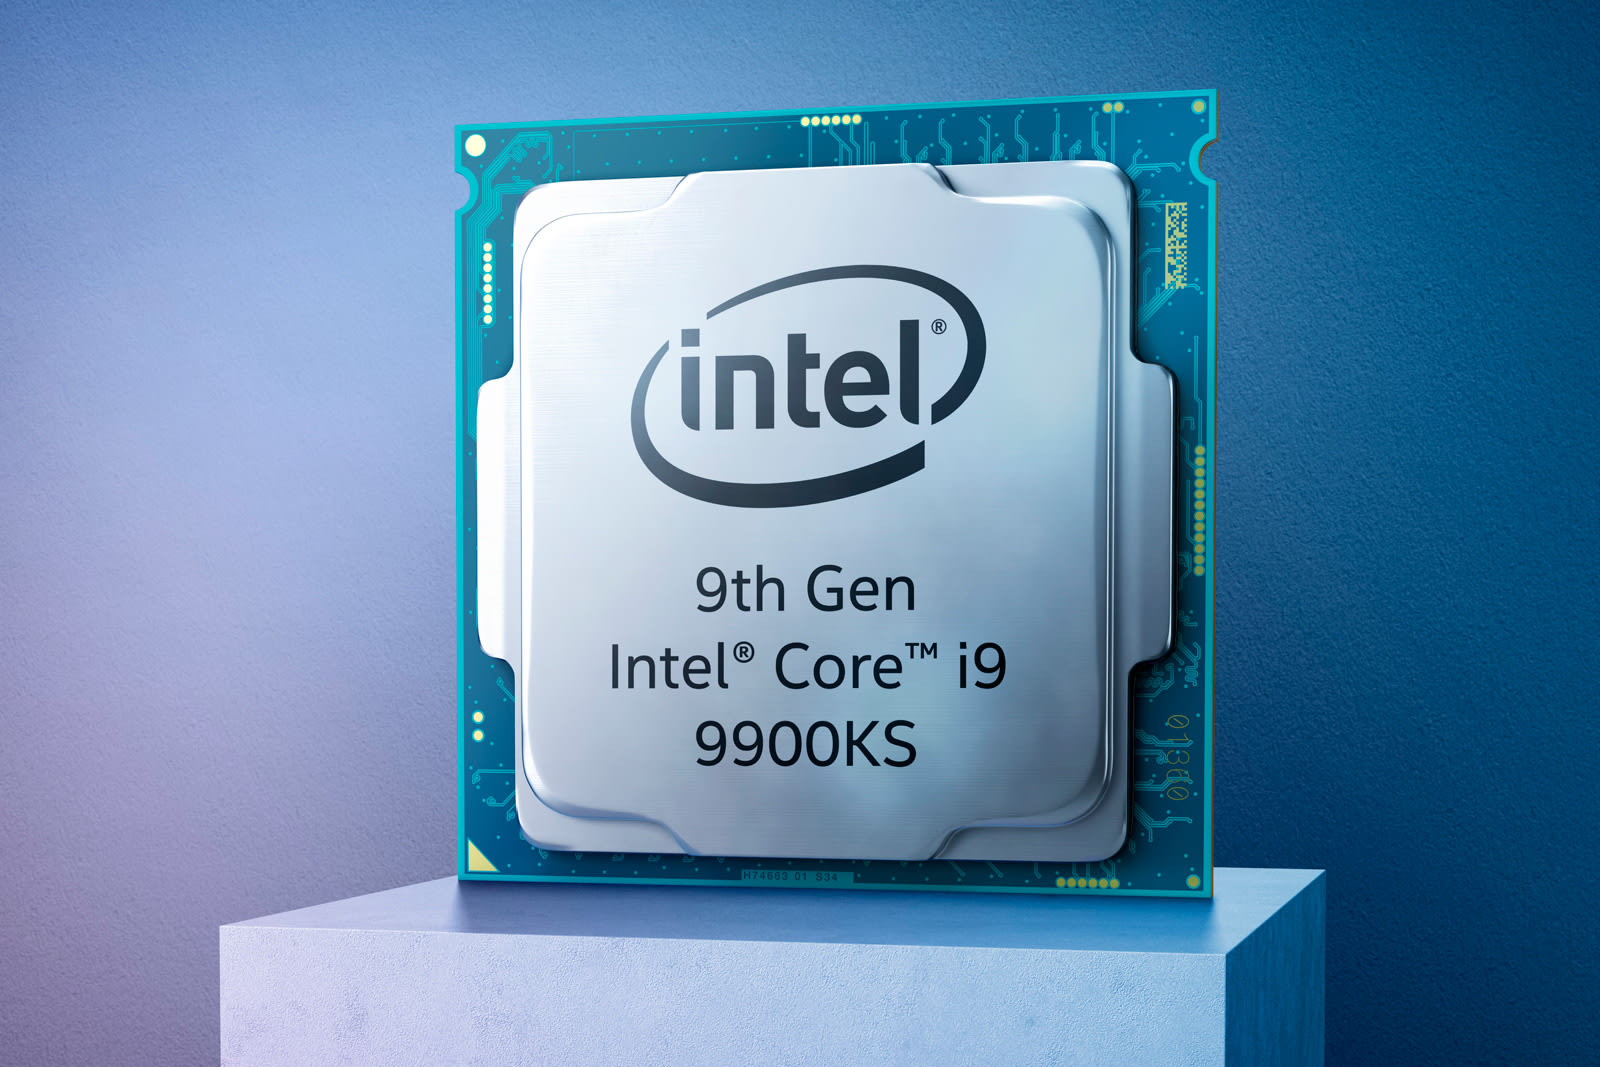 Intel Core i9-9900KS special edition processor